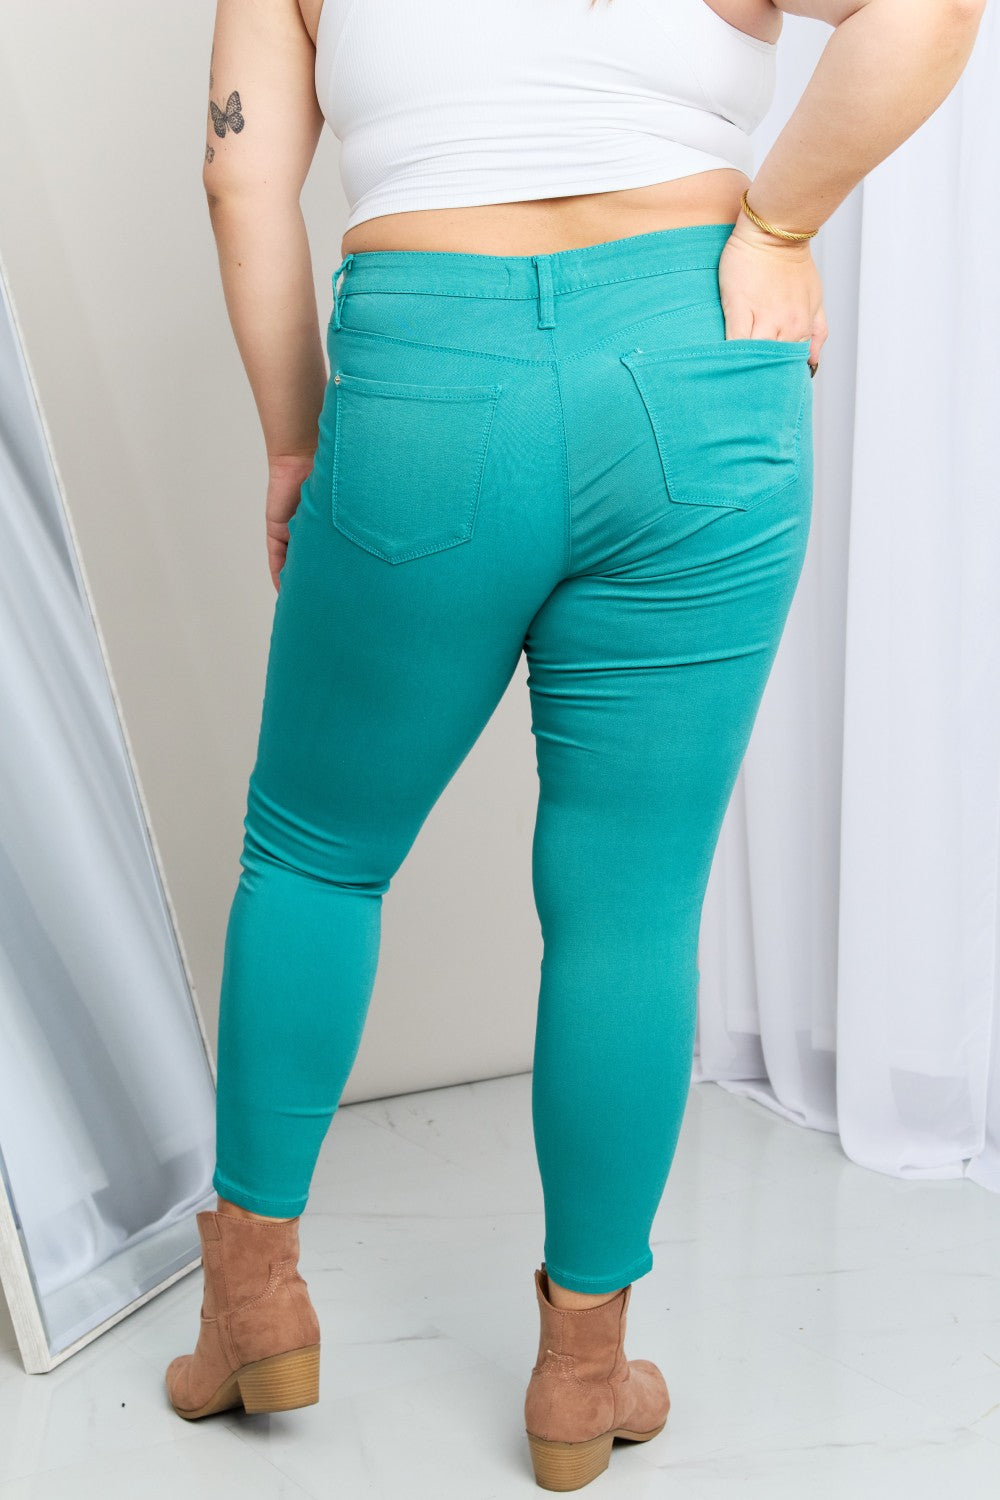 Jeanswear Kate Hyper-Stretch Full Size Mid-Rise Skinny Jeans in Sea Green DromedarShop.com Online Boutique